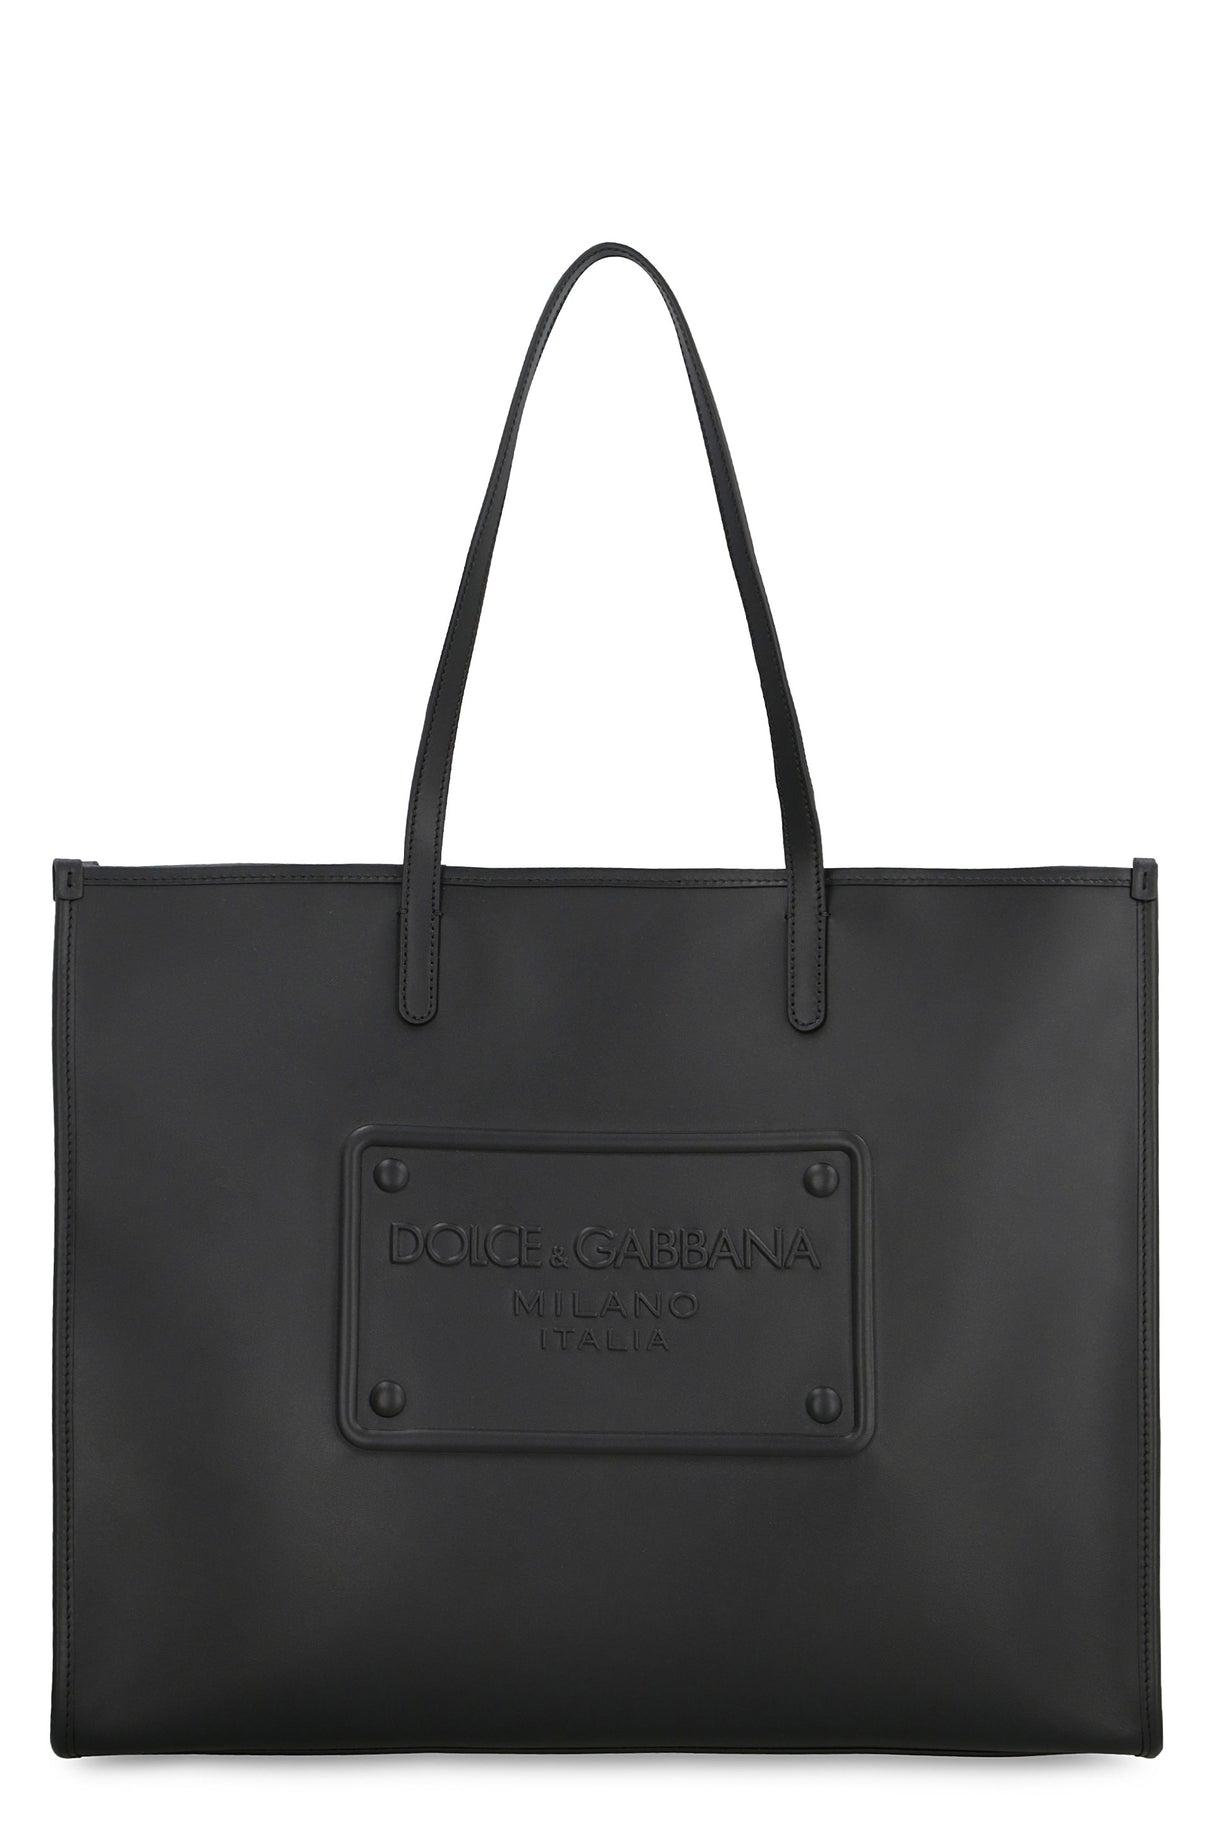 DOLCE & GABBANA Smooth Leather Tote Handbag for Men - Black